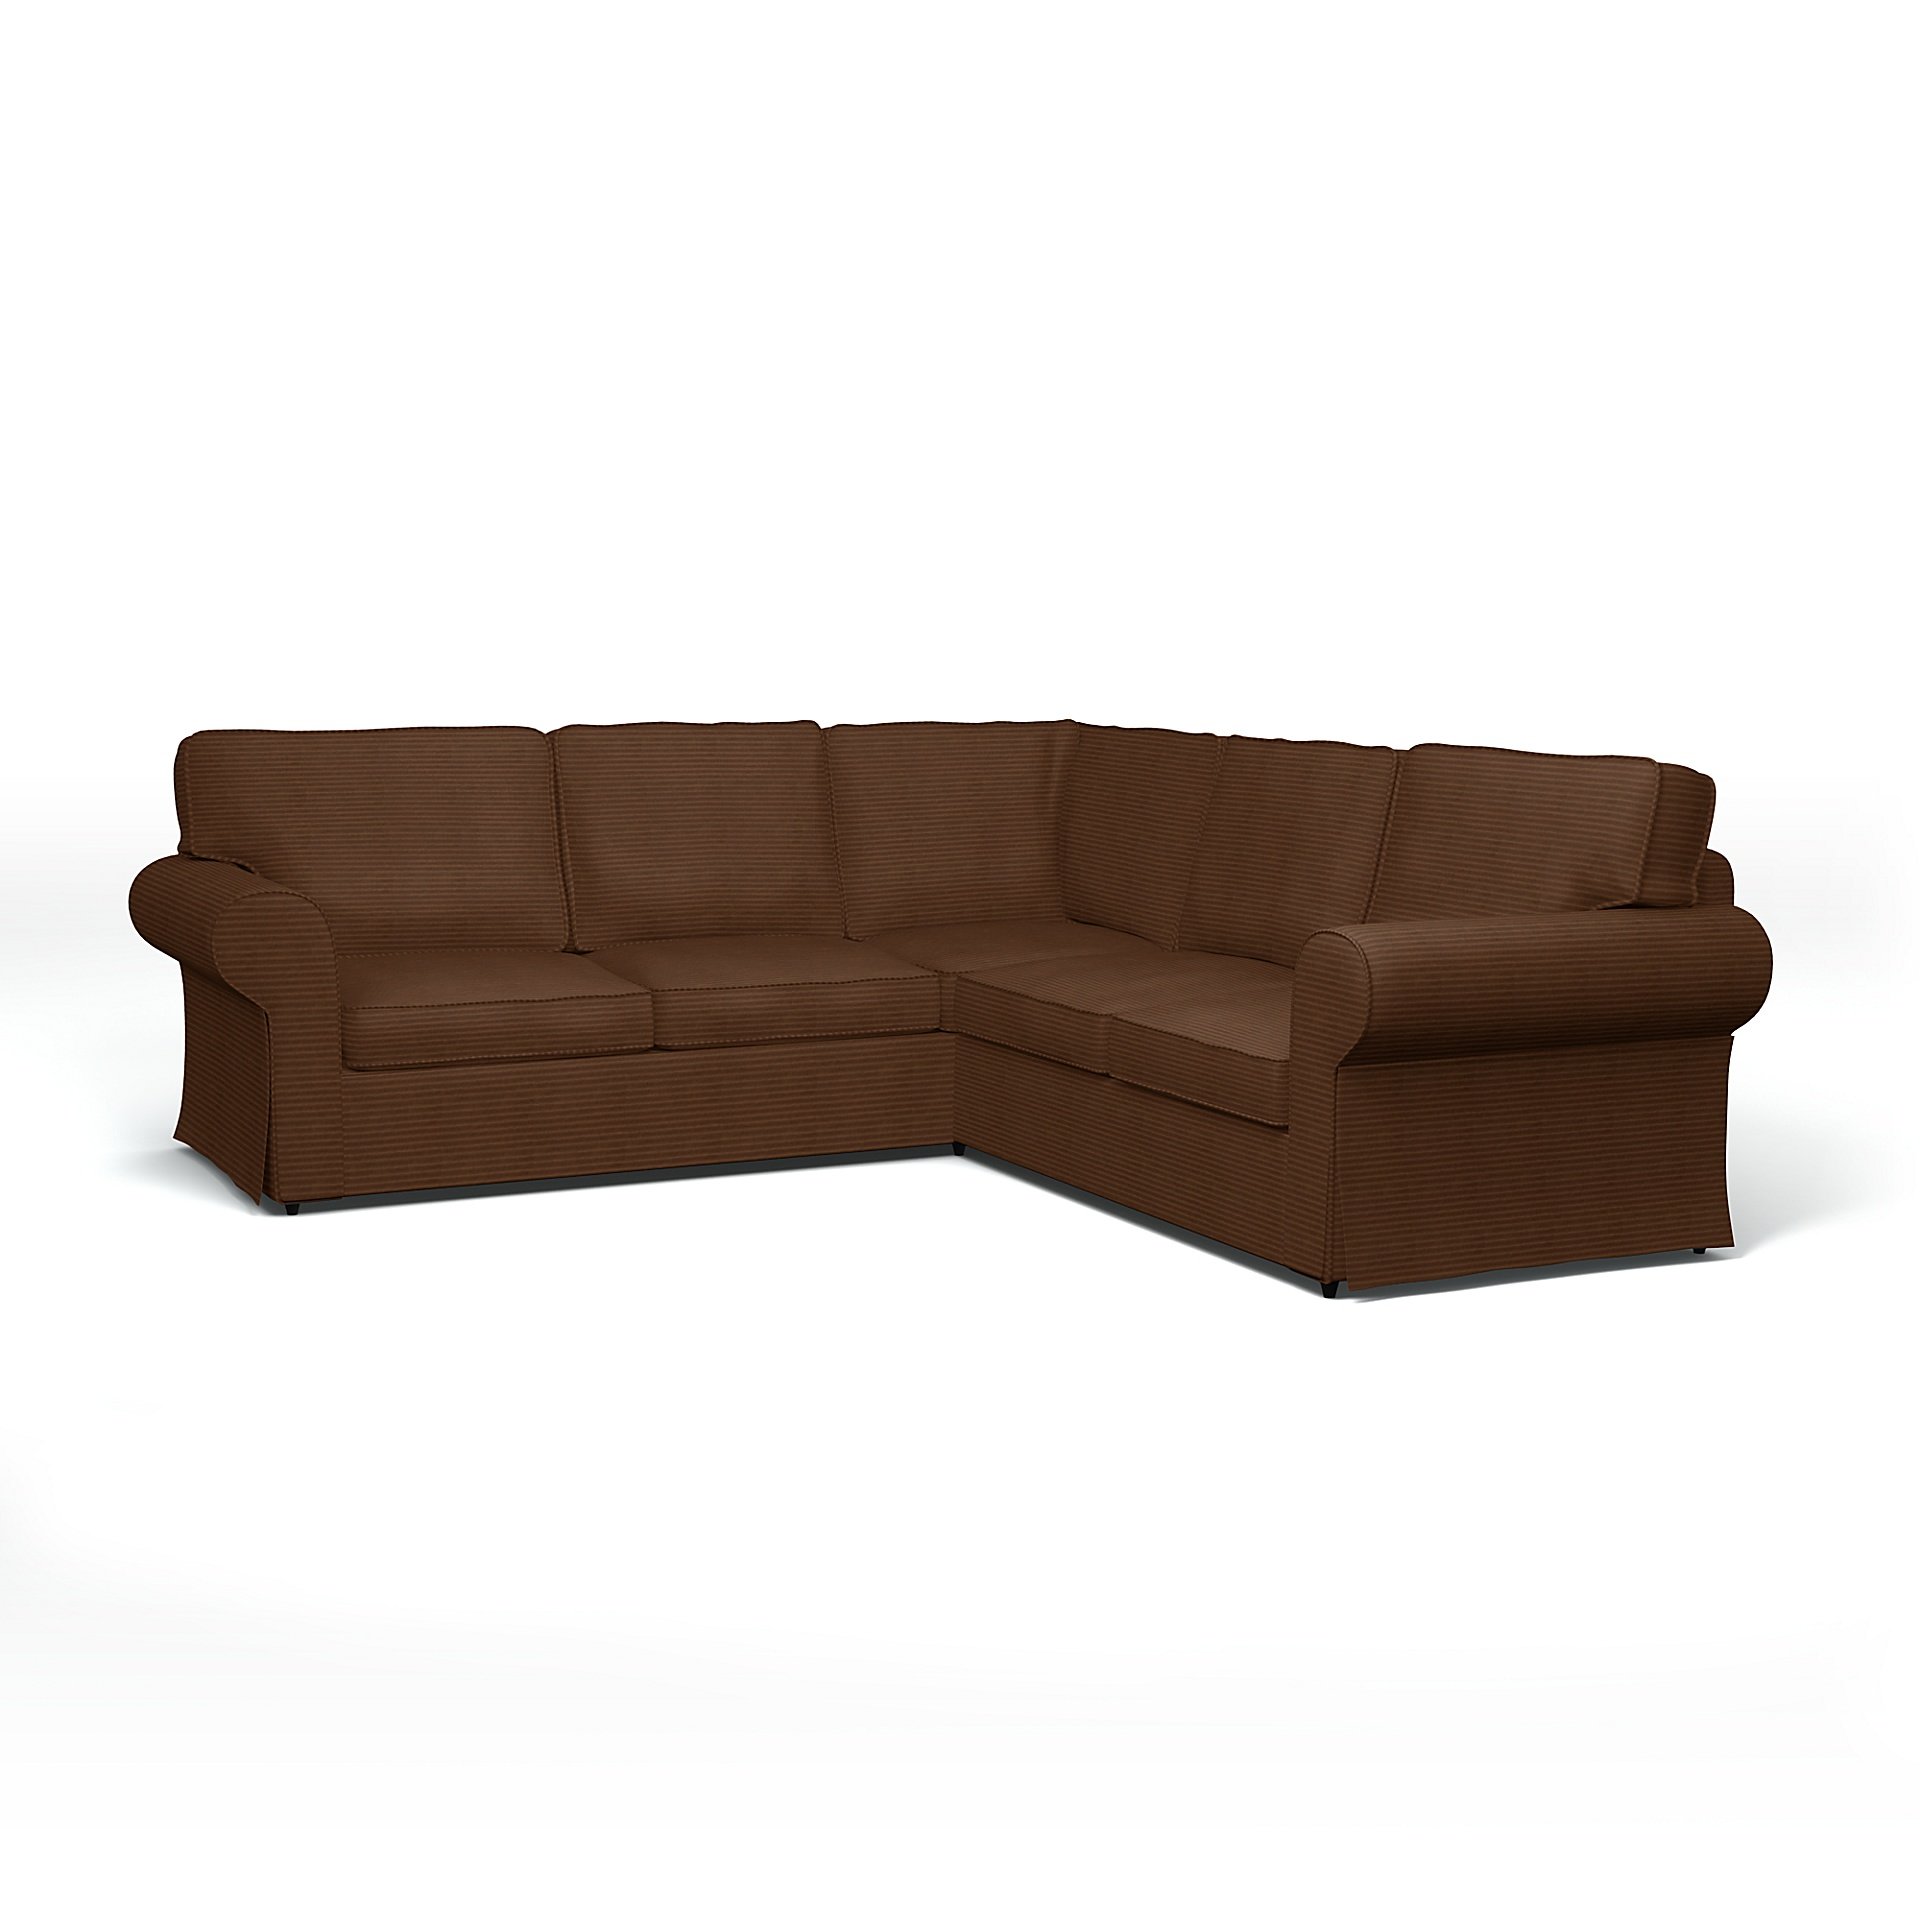 IKEA - Ektorp 4 Seater Corner Sofa Cover, Chocolate Brown, Corduroy - Bemz